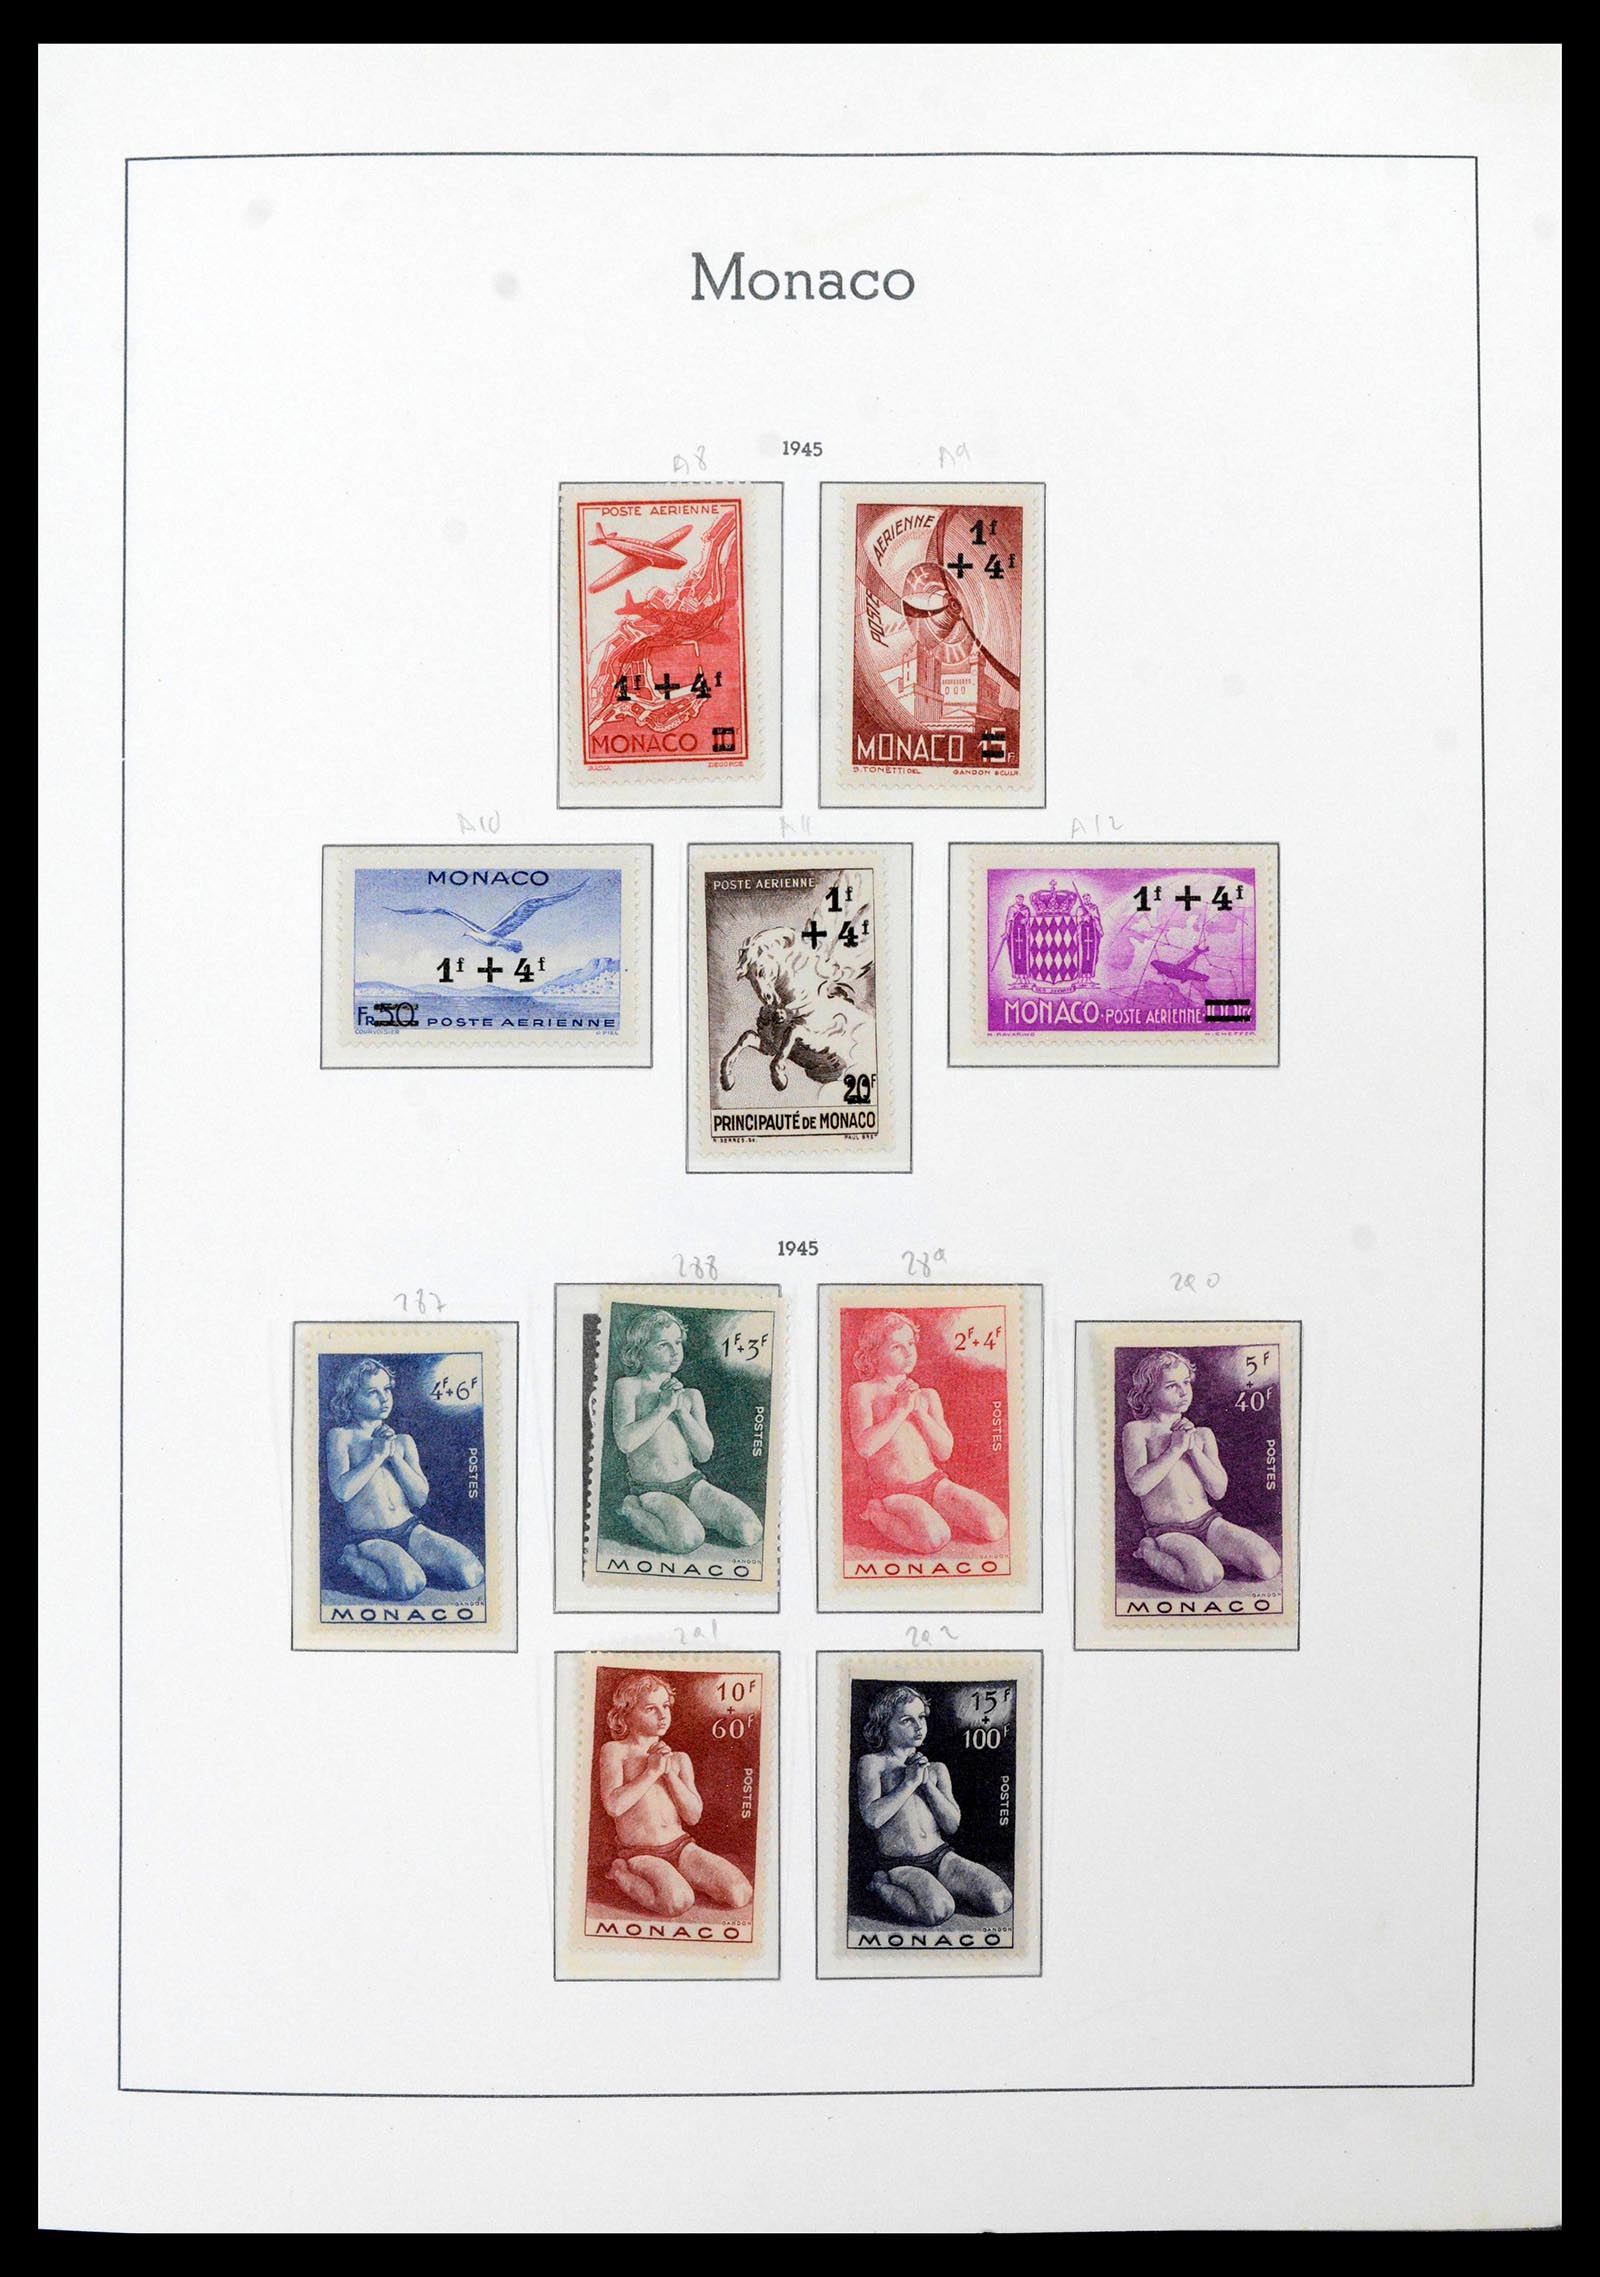 39250 0027 - Stamp collection 39250 Monaco 1885-1995.